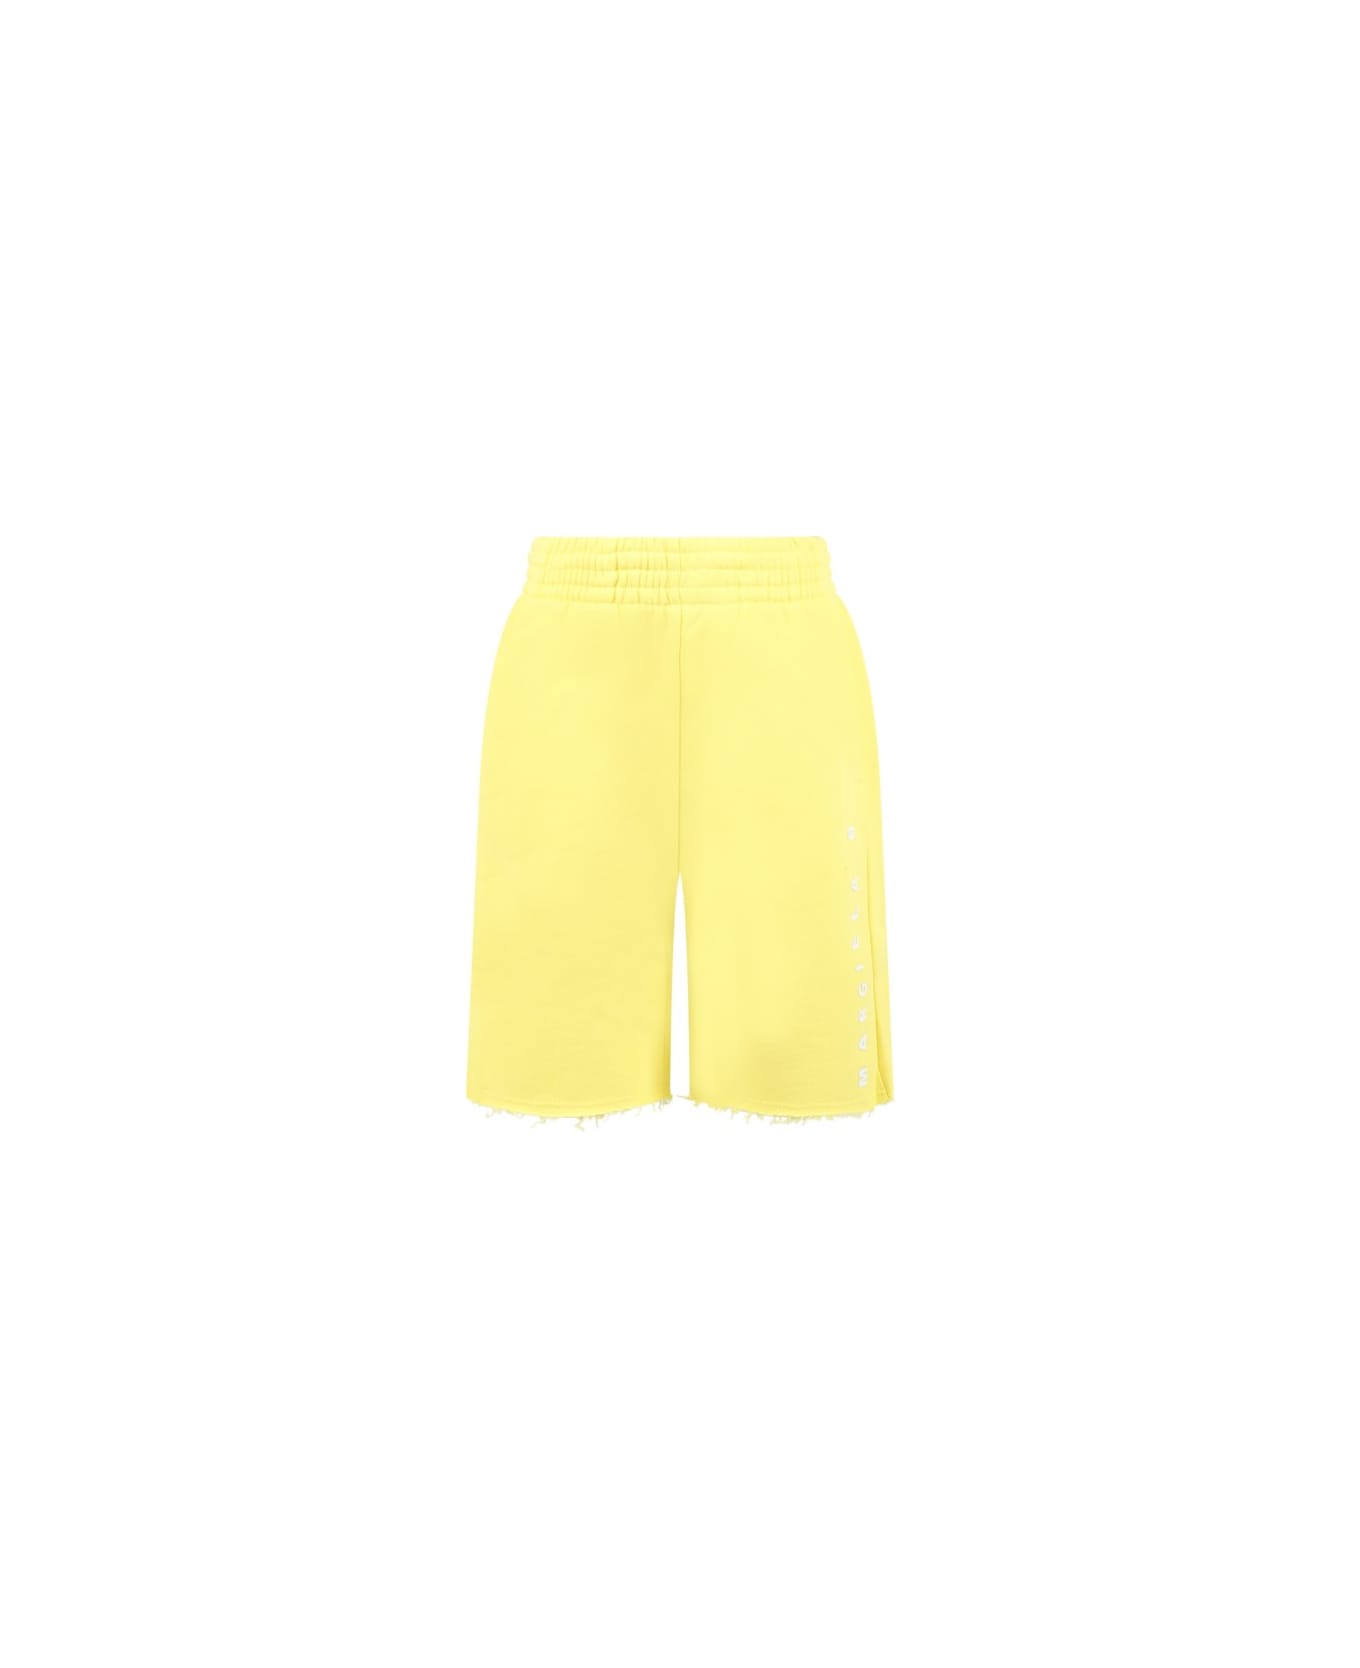 MM6 Maison Margiela Sports Shorts With Print - Yellow ボトムス